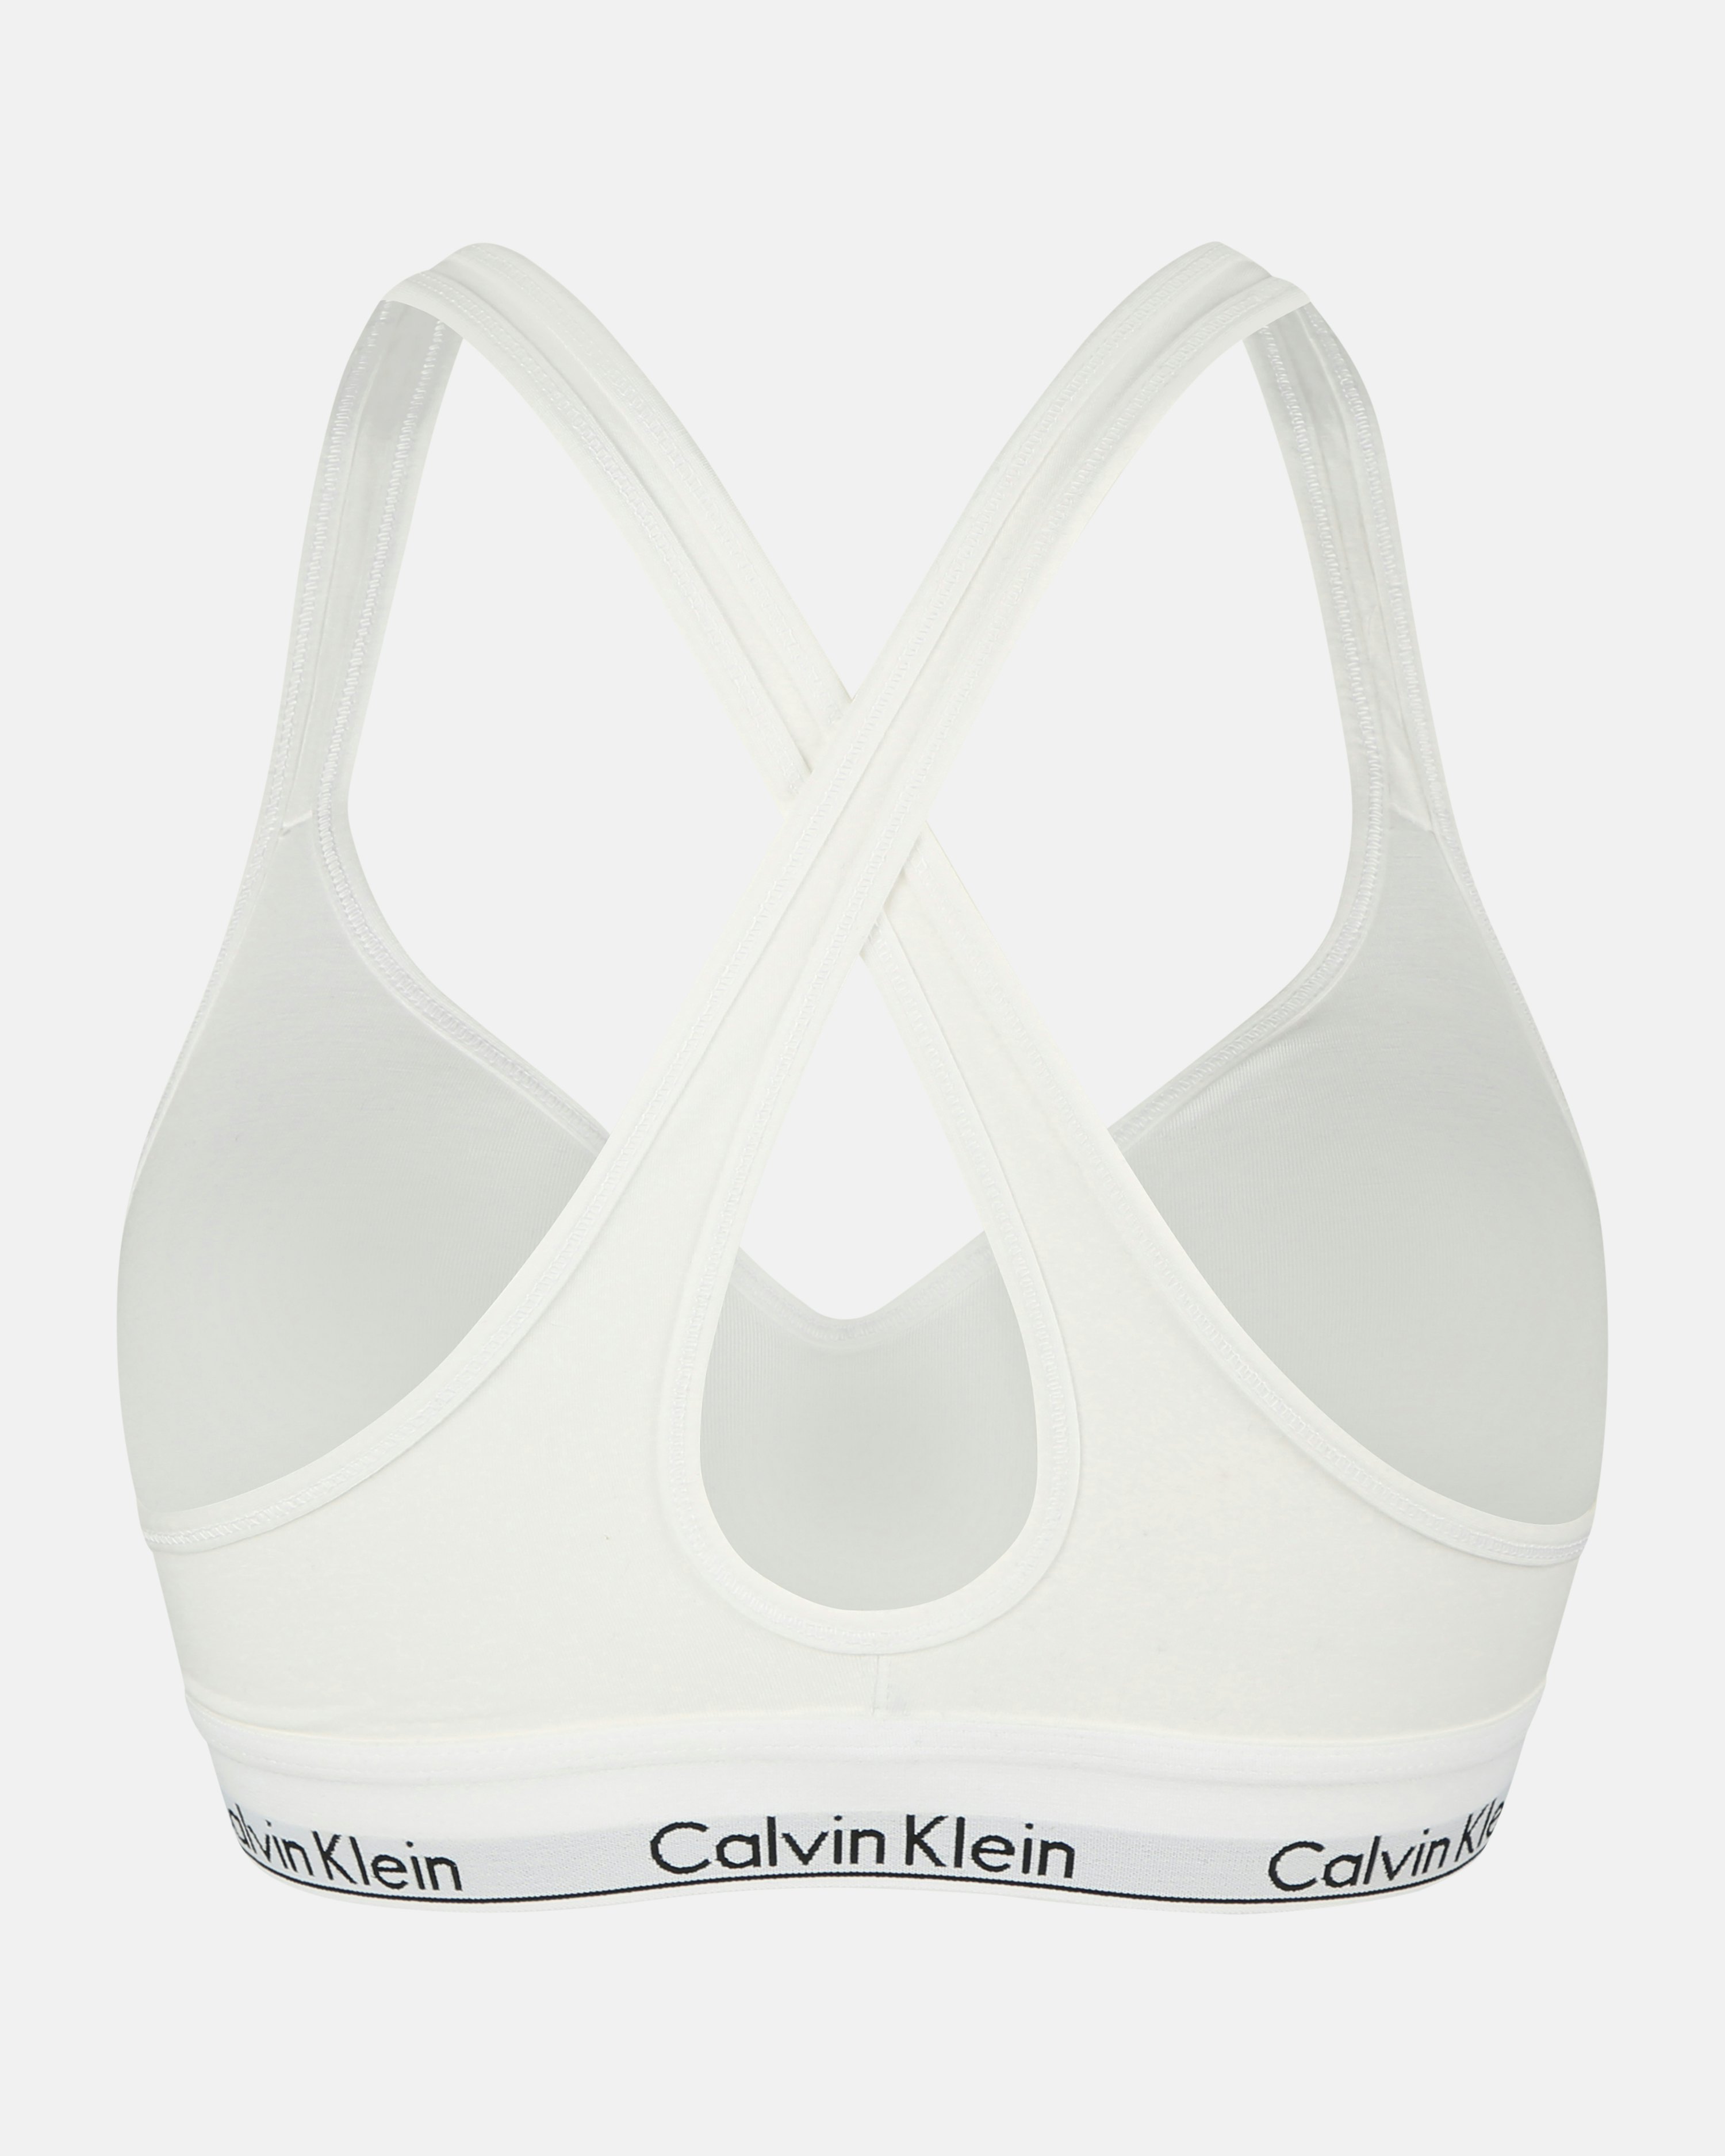 NEW Calvin Klein White Bralette & Boyshort Set CK Logo 2 Pc S M L